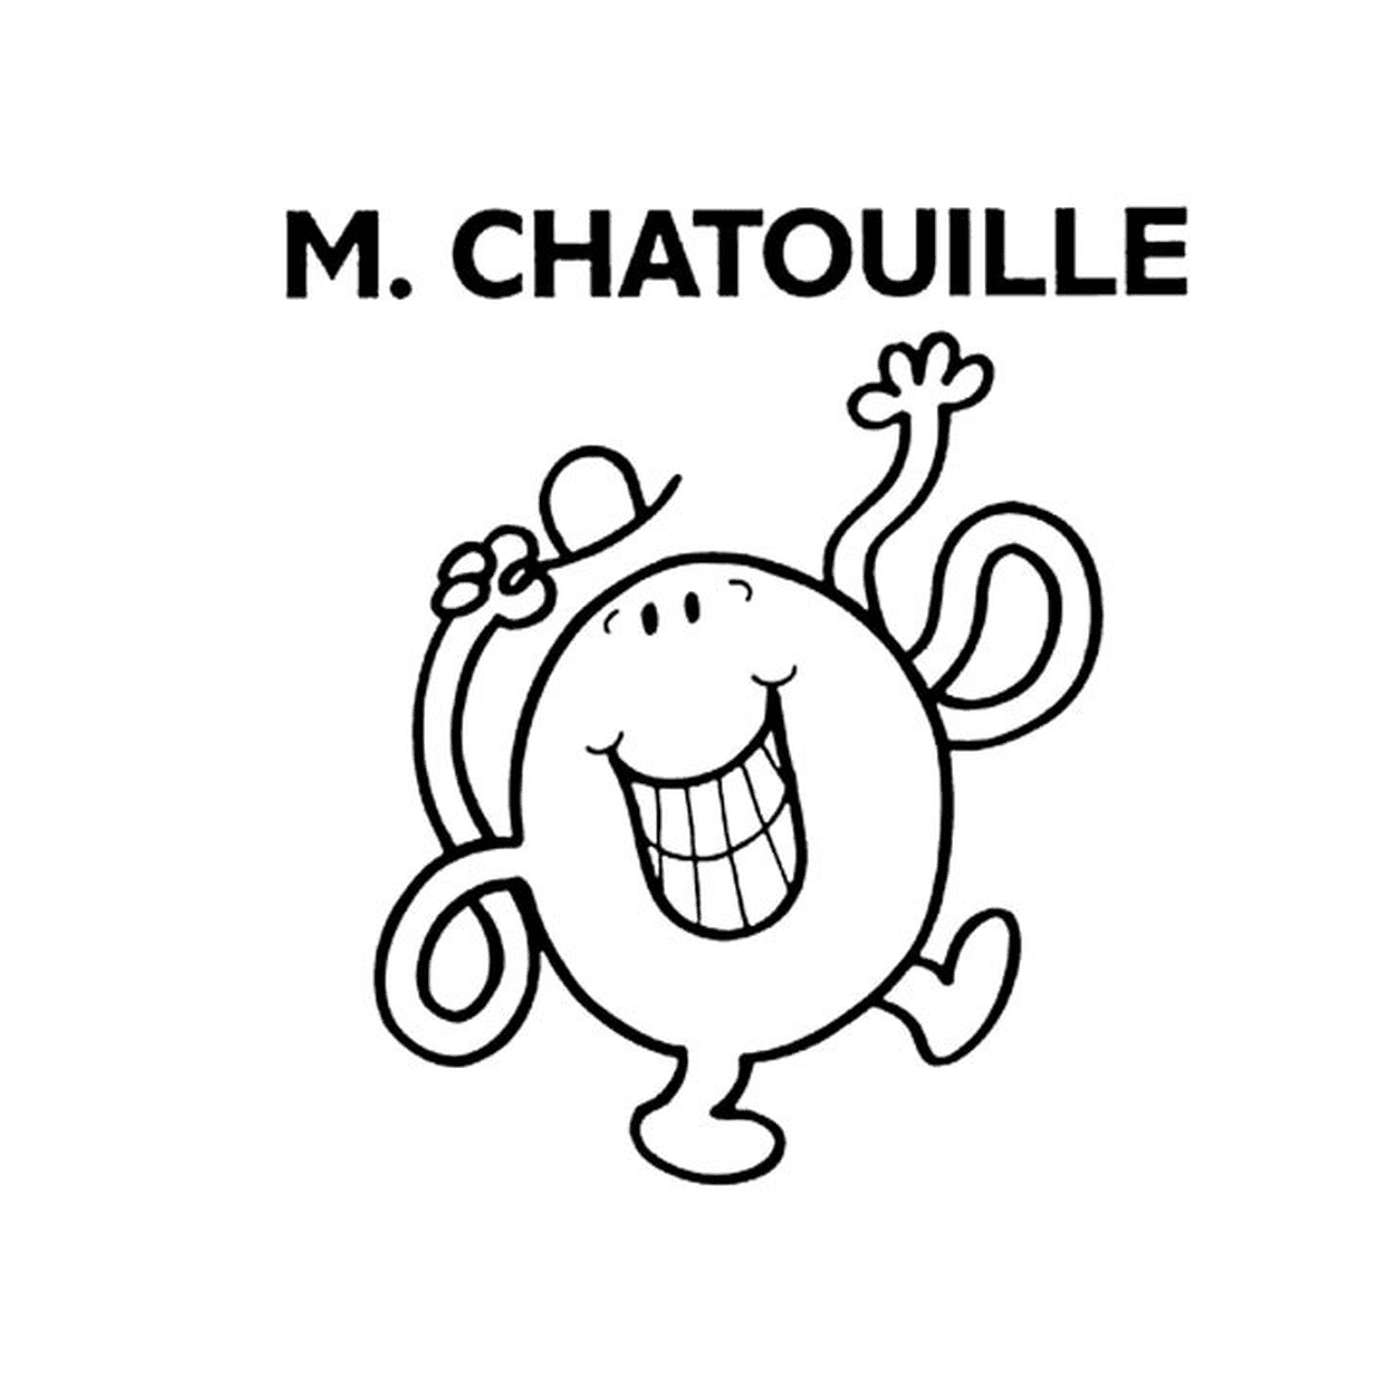   Monsieur Madame Madame Chatouille 